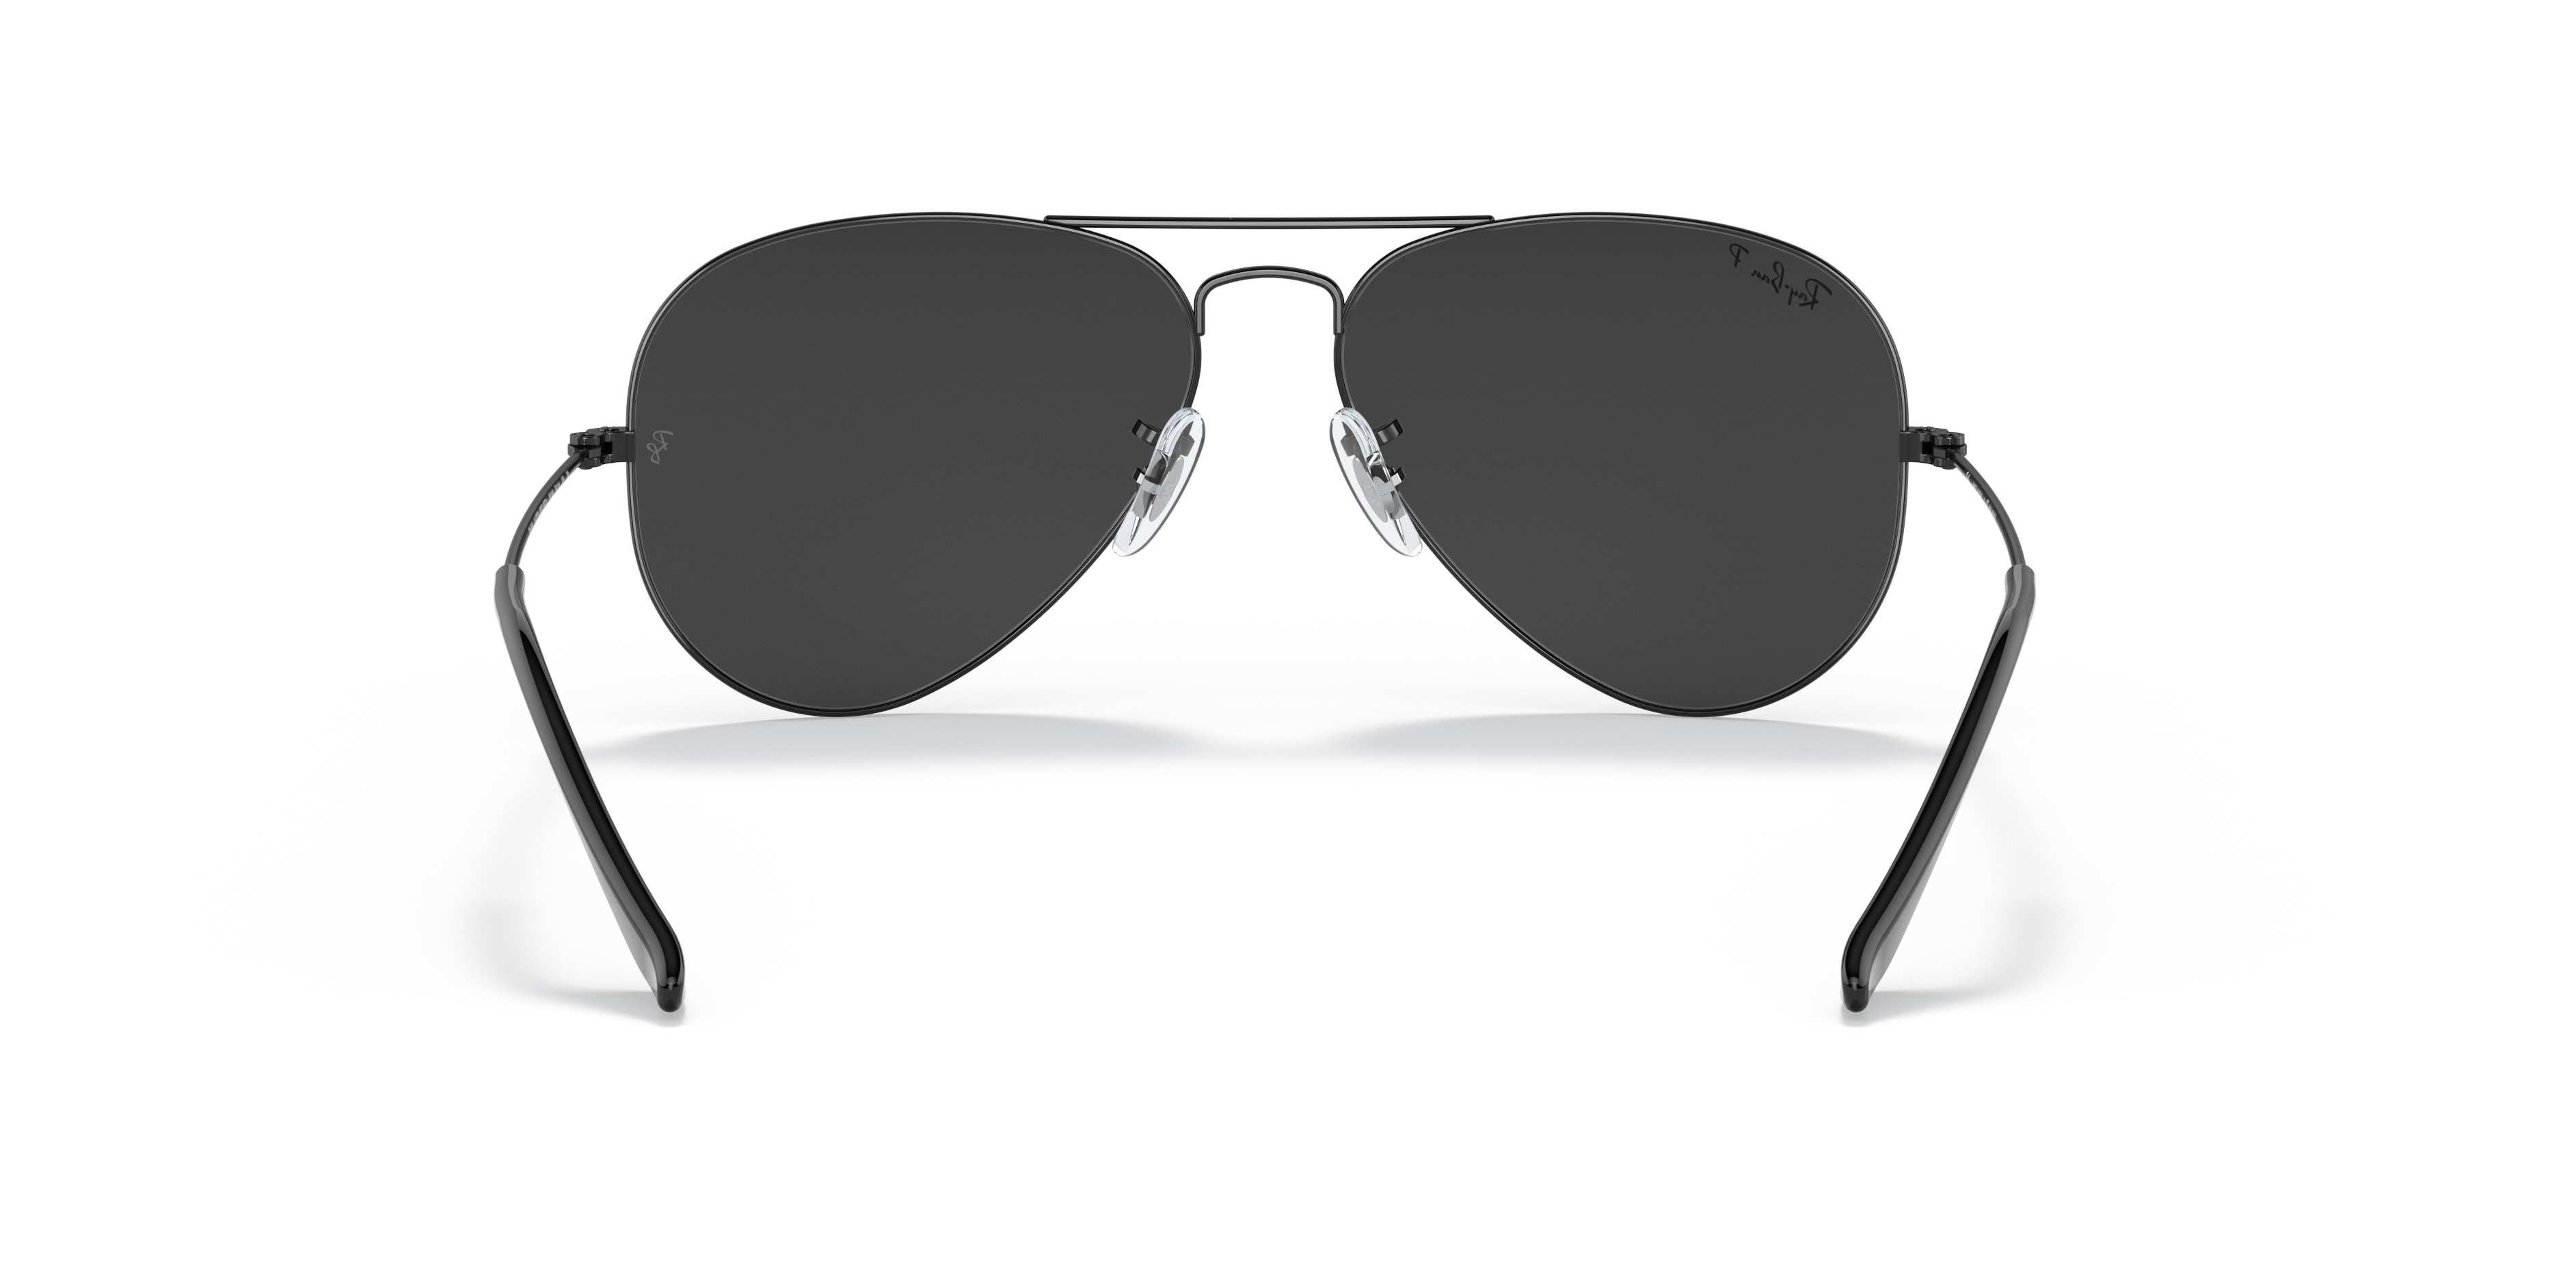 New Black Frame Black Lens Polarized S&A Sunglasses for everyday use anywhere 